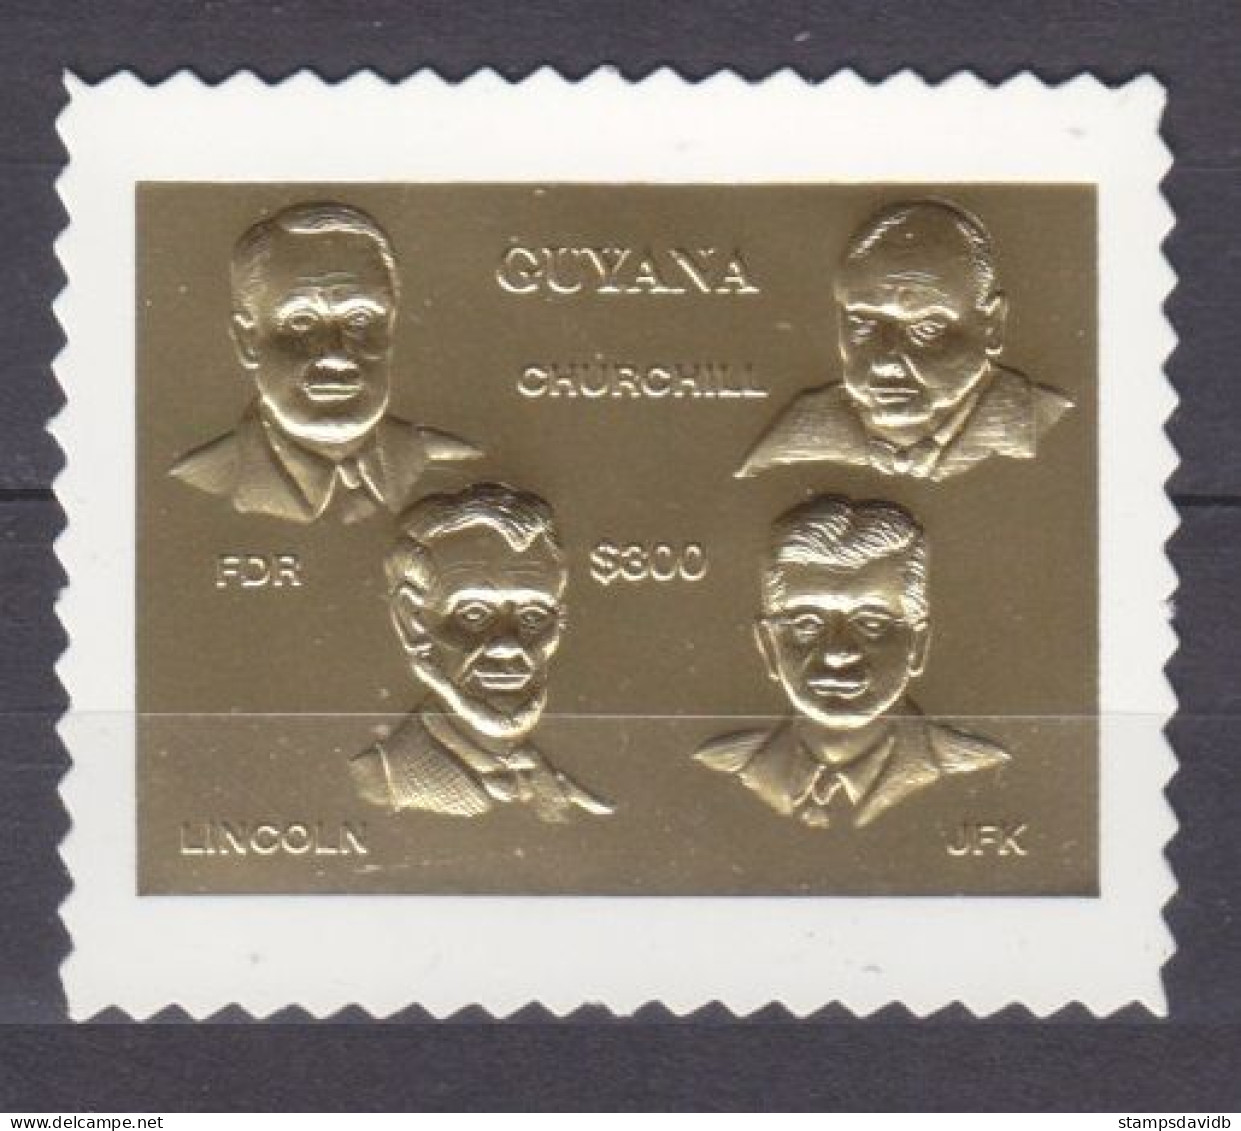 1994 Guyana 4520 Gold Politicians - A. Lincoln, V. Churchill, J. Kennedy7,50 € - Sir Winston Churchill